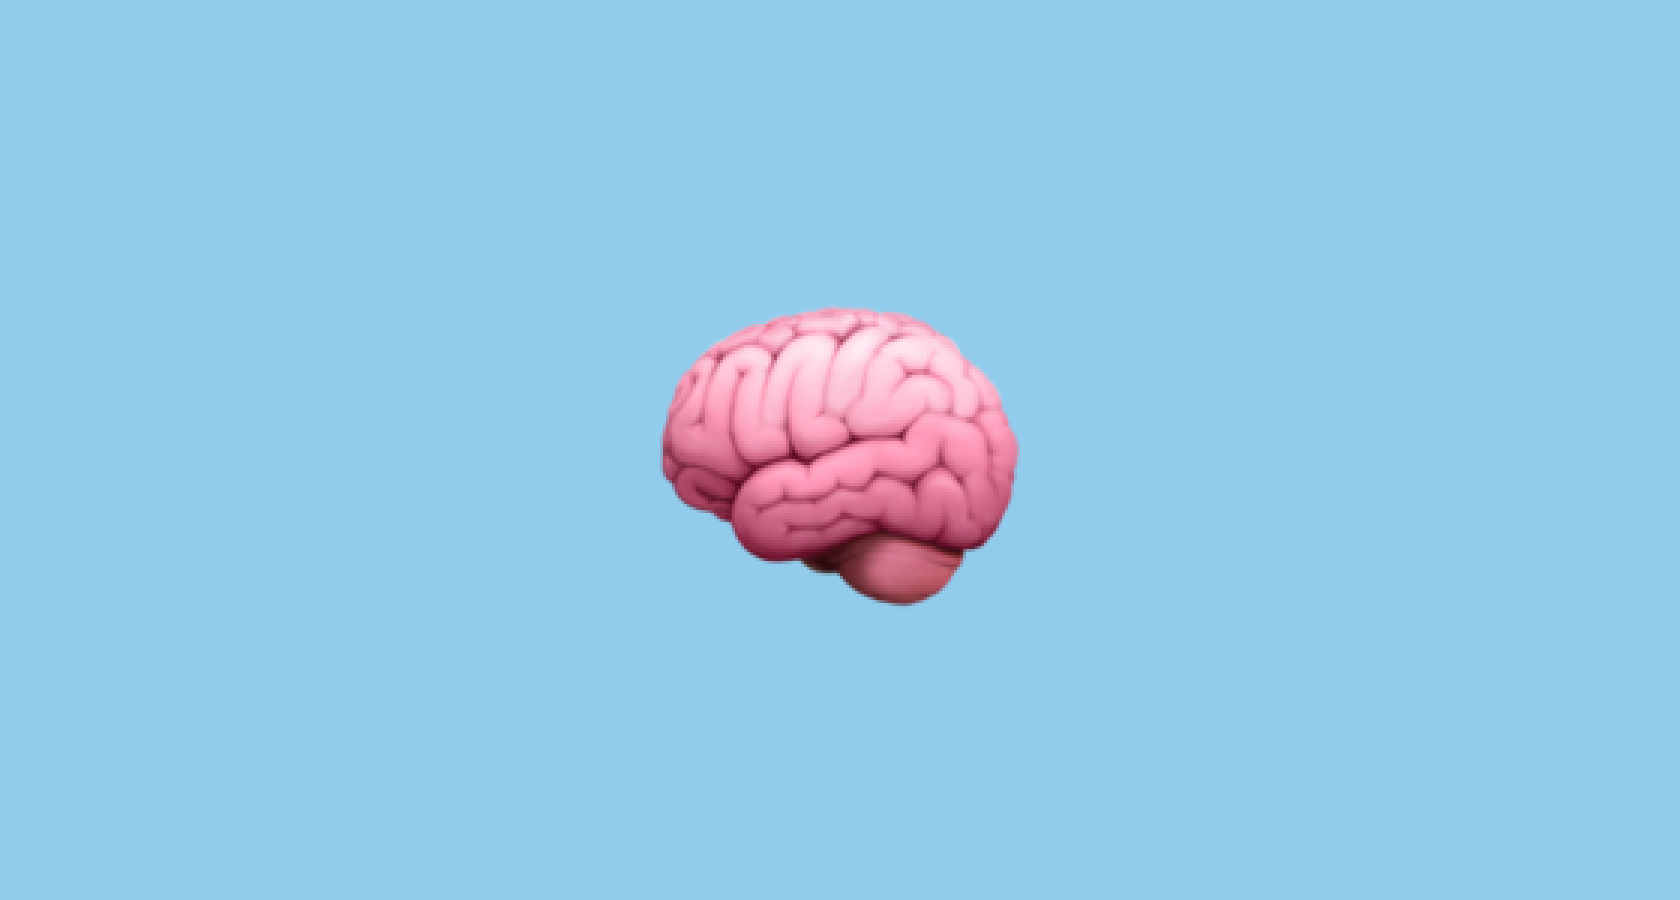 Brain emoji. ЭМОДЖИ мозг. Мозги смайлик. Мозг смайлик айфон. Эмодзи мозг на прозрачном фоне.